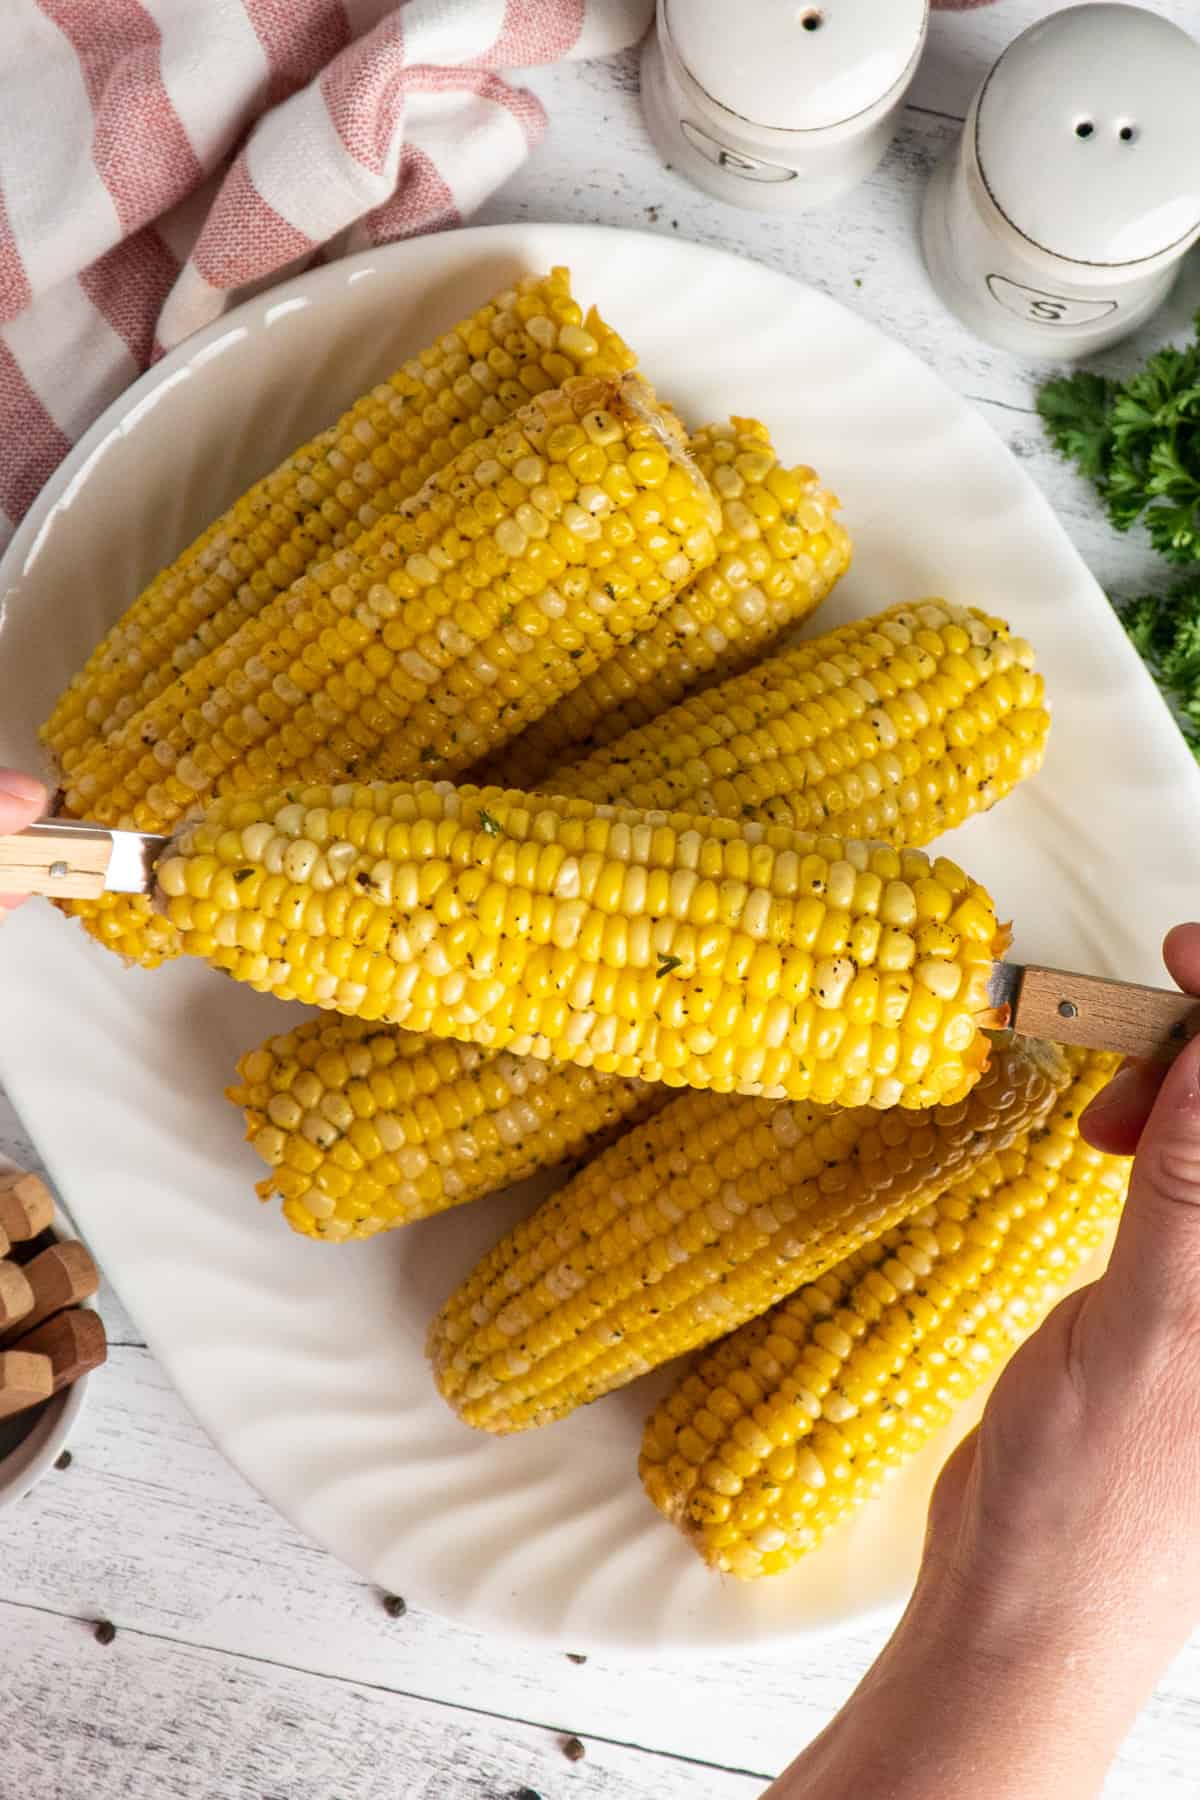 Hands holding a piece of crock pot corn on the cob.